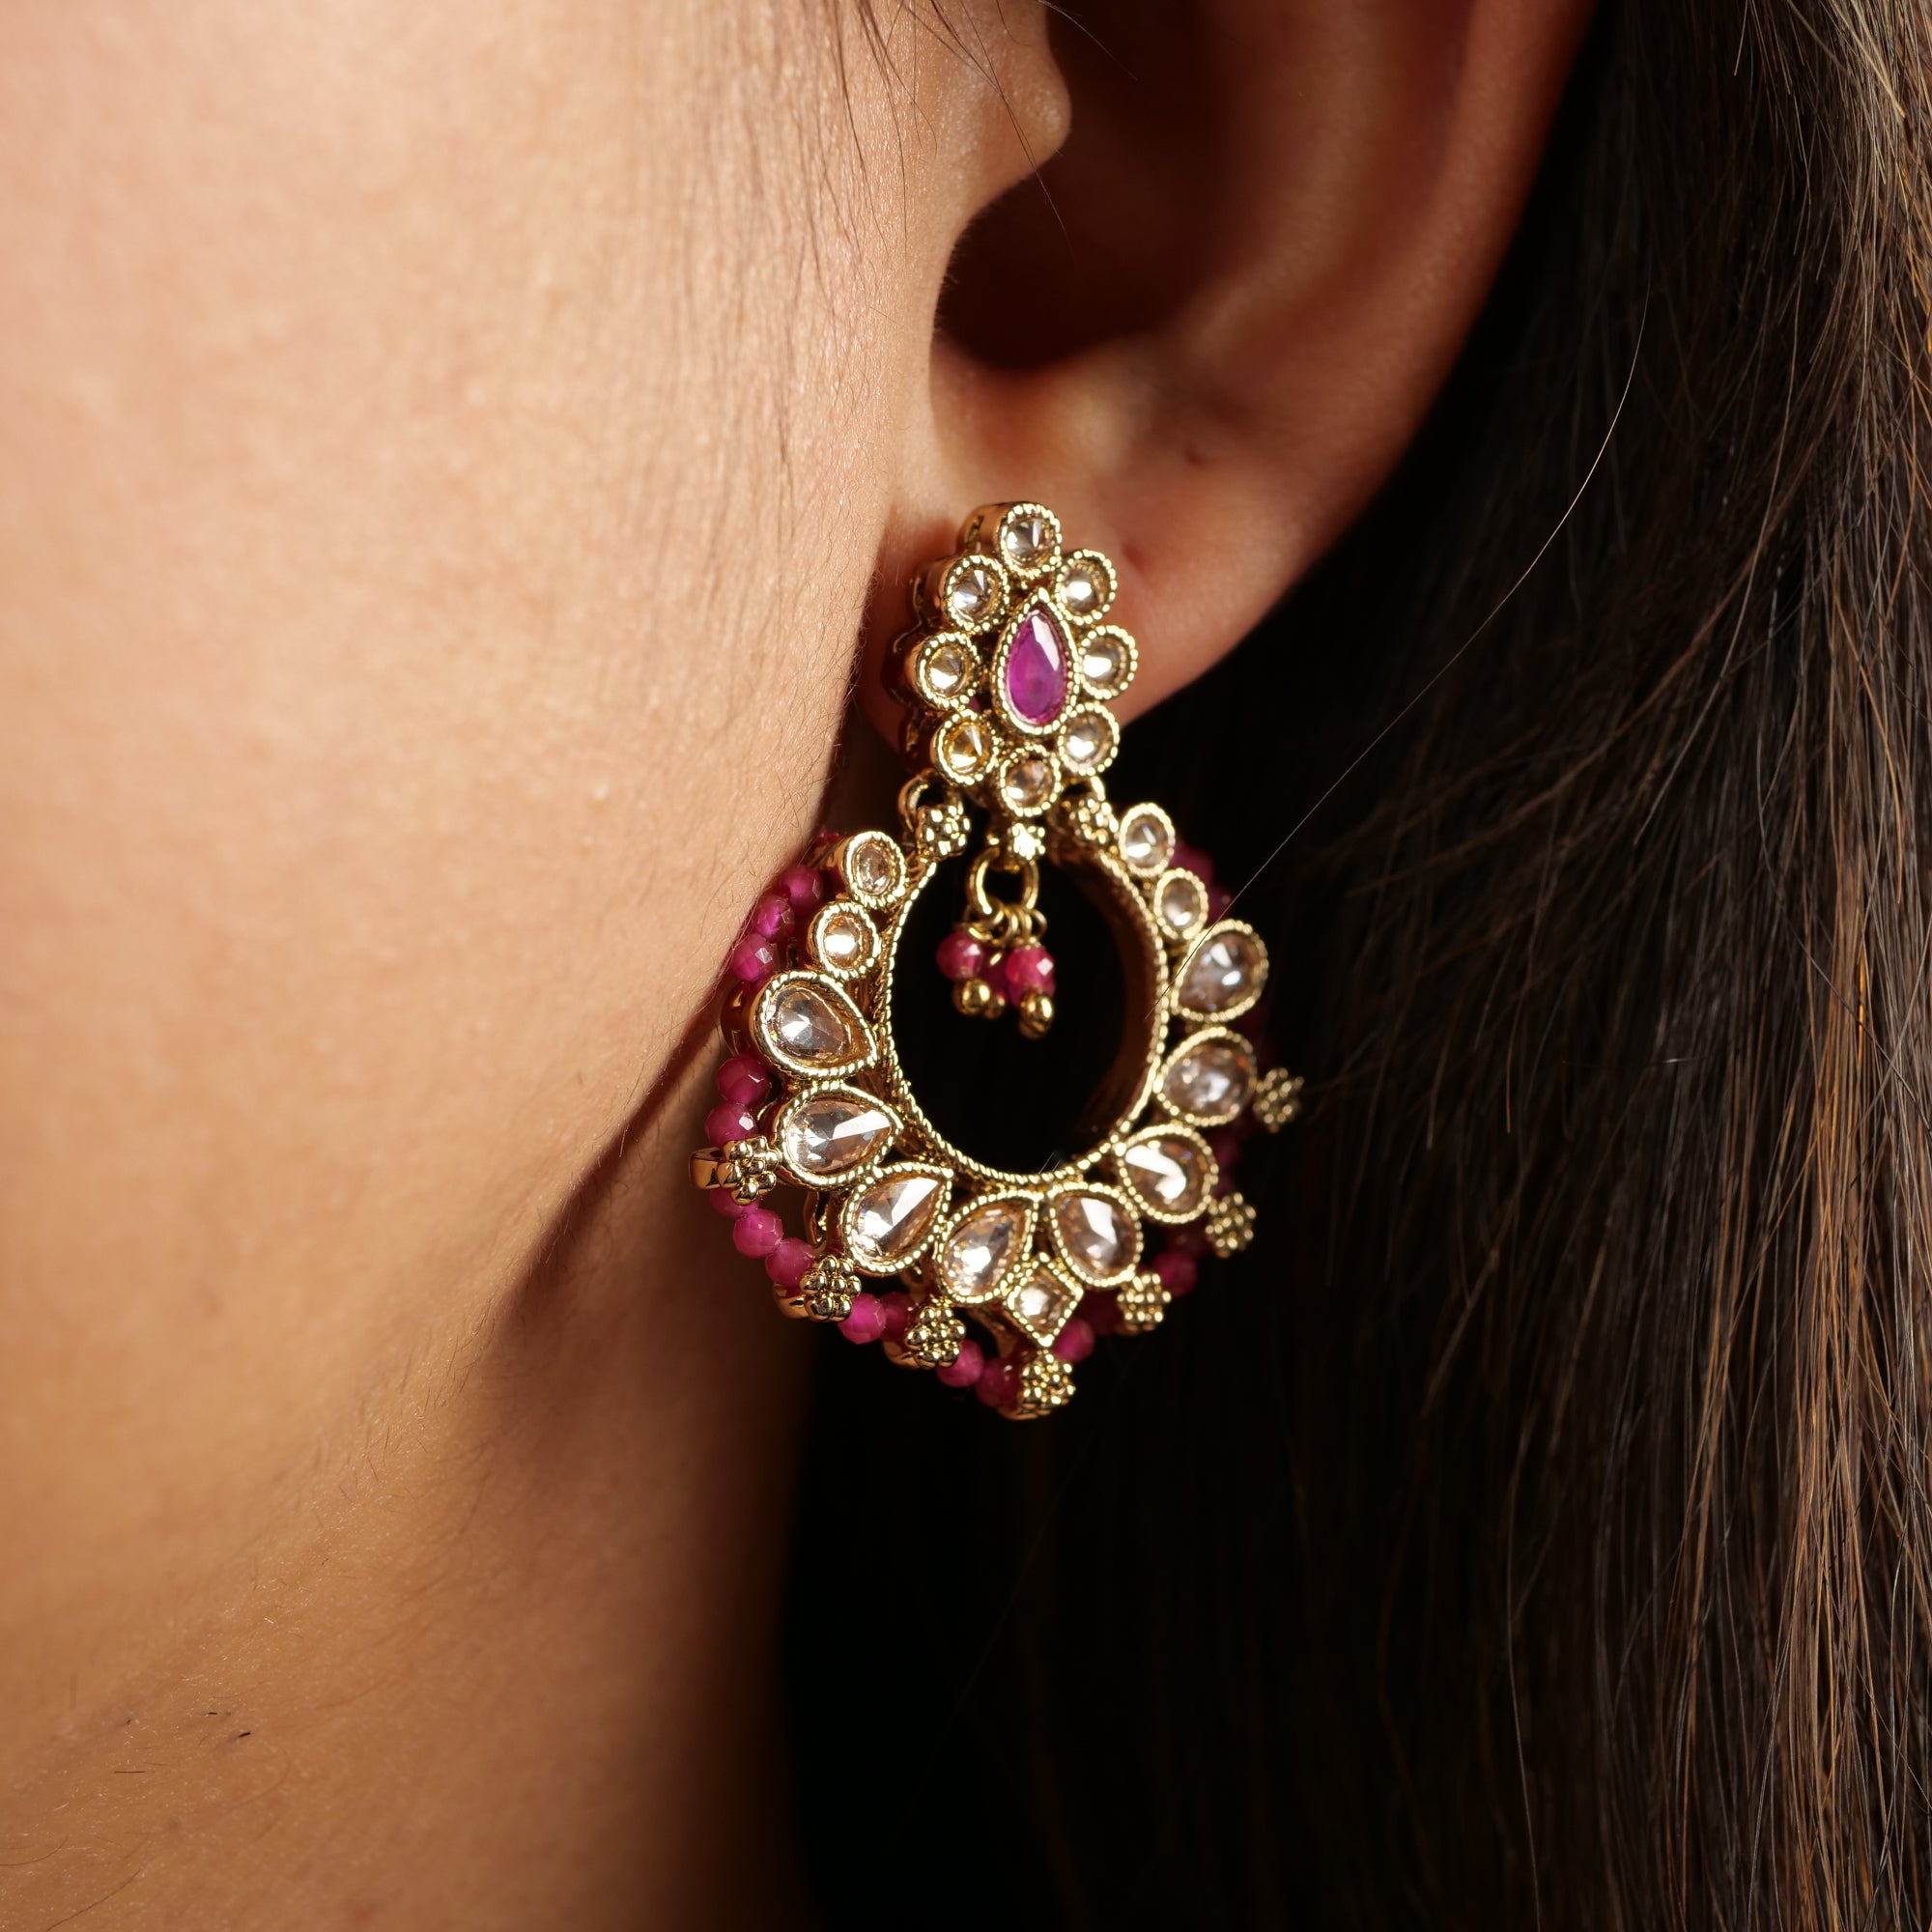 Ethnic Bead-Edge Earrings in Ruby